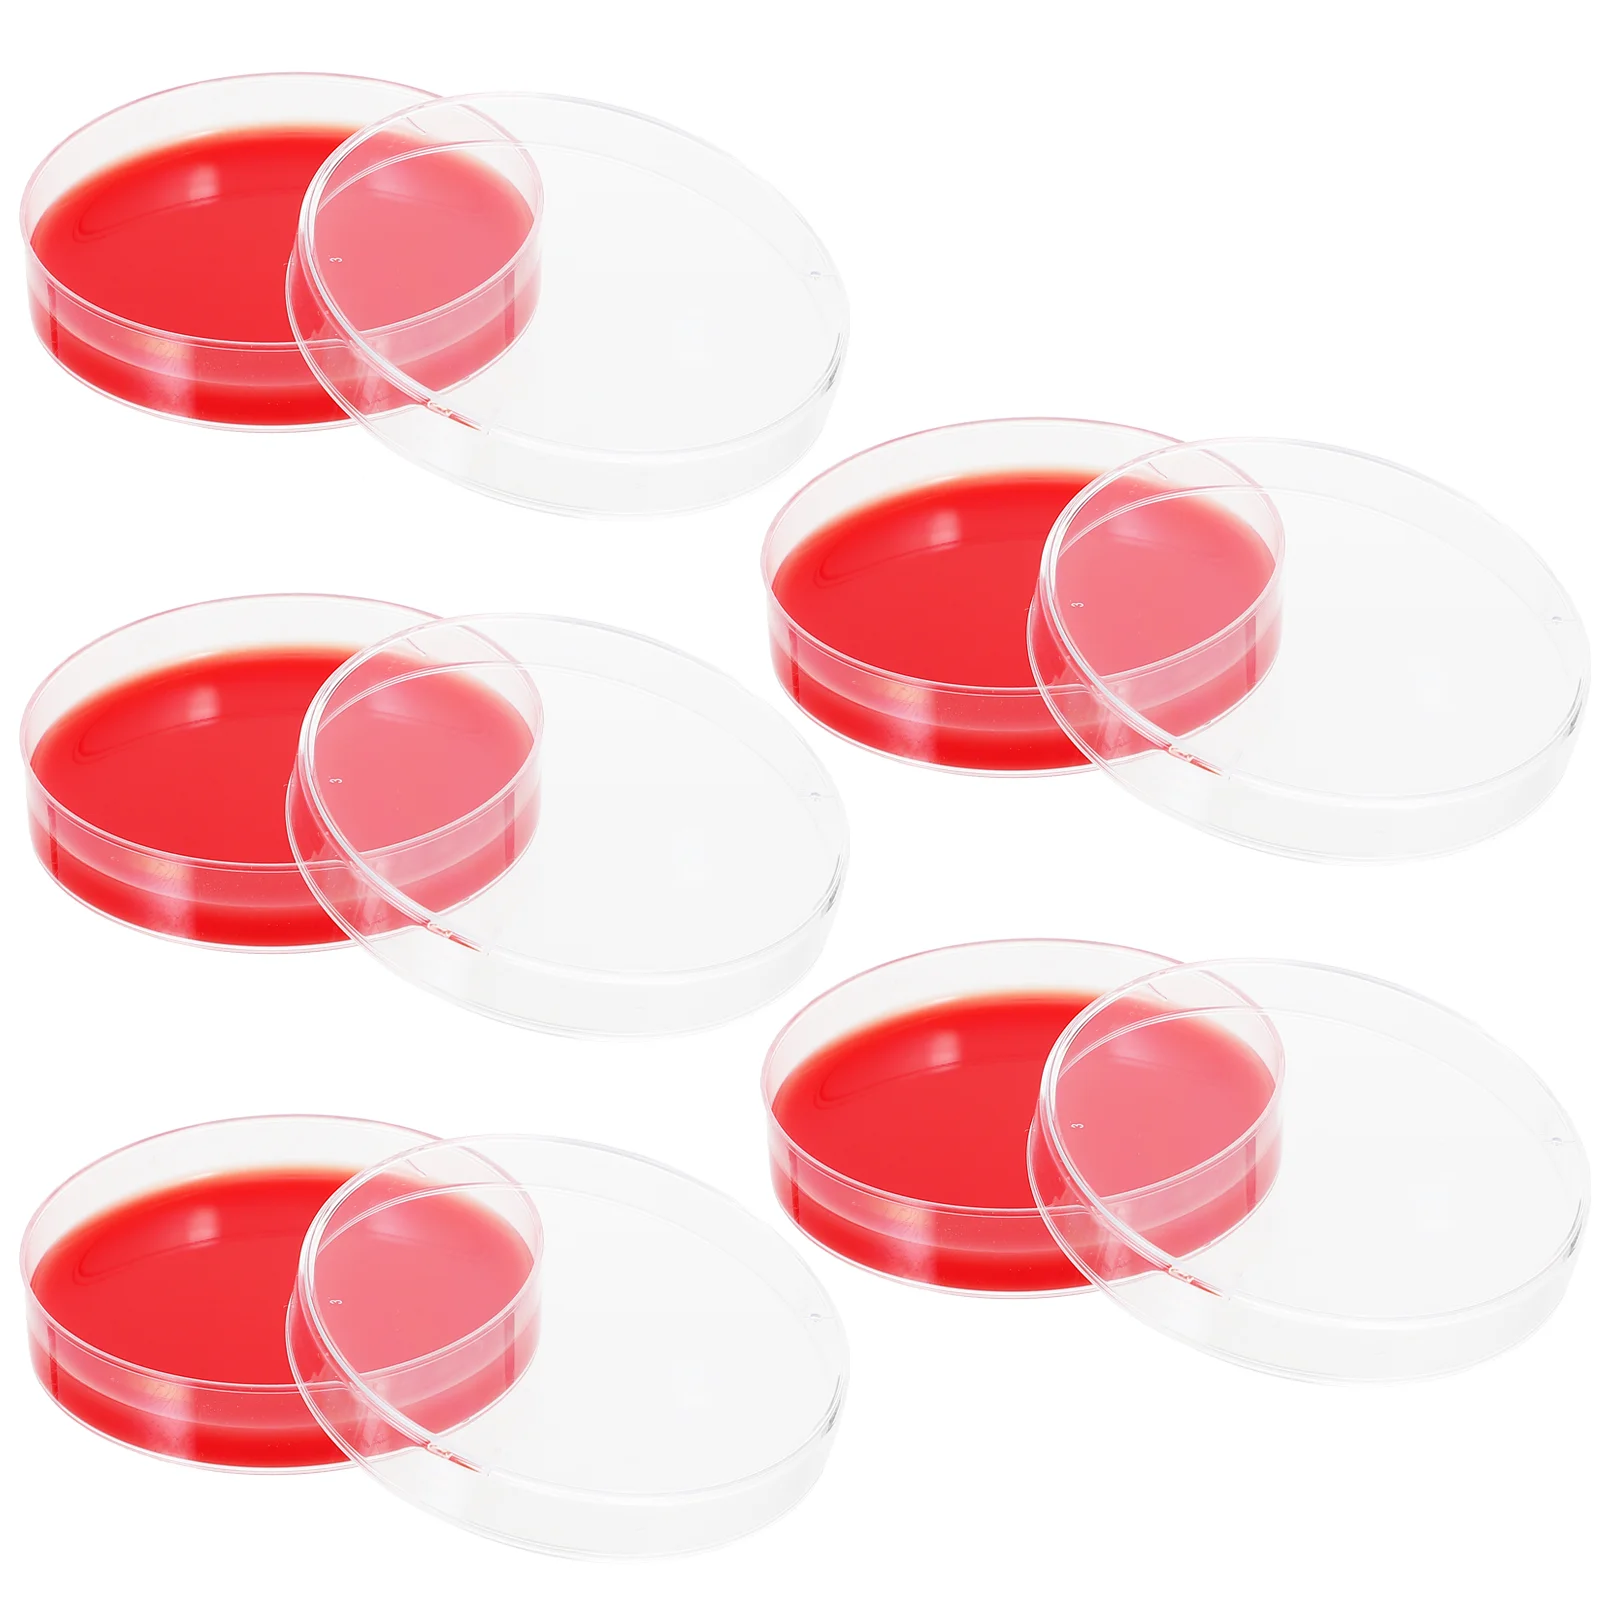 

Agar Petri Dishes Plates Medium Platelabs Dish Blood Sterile Culture Science Lids Growth Prepoured Project Plasticextract Malt